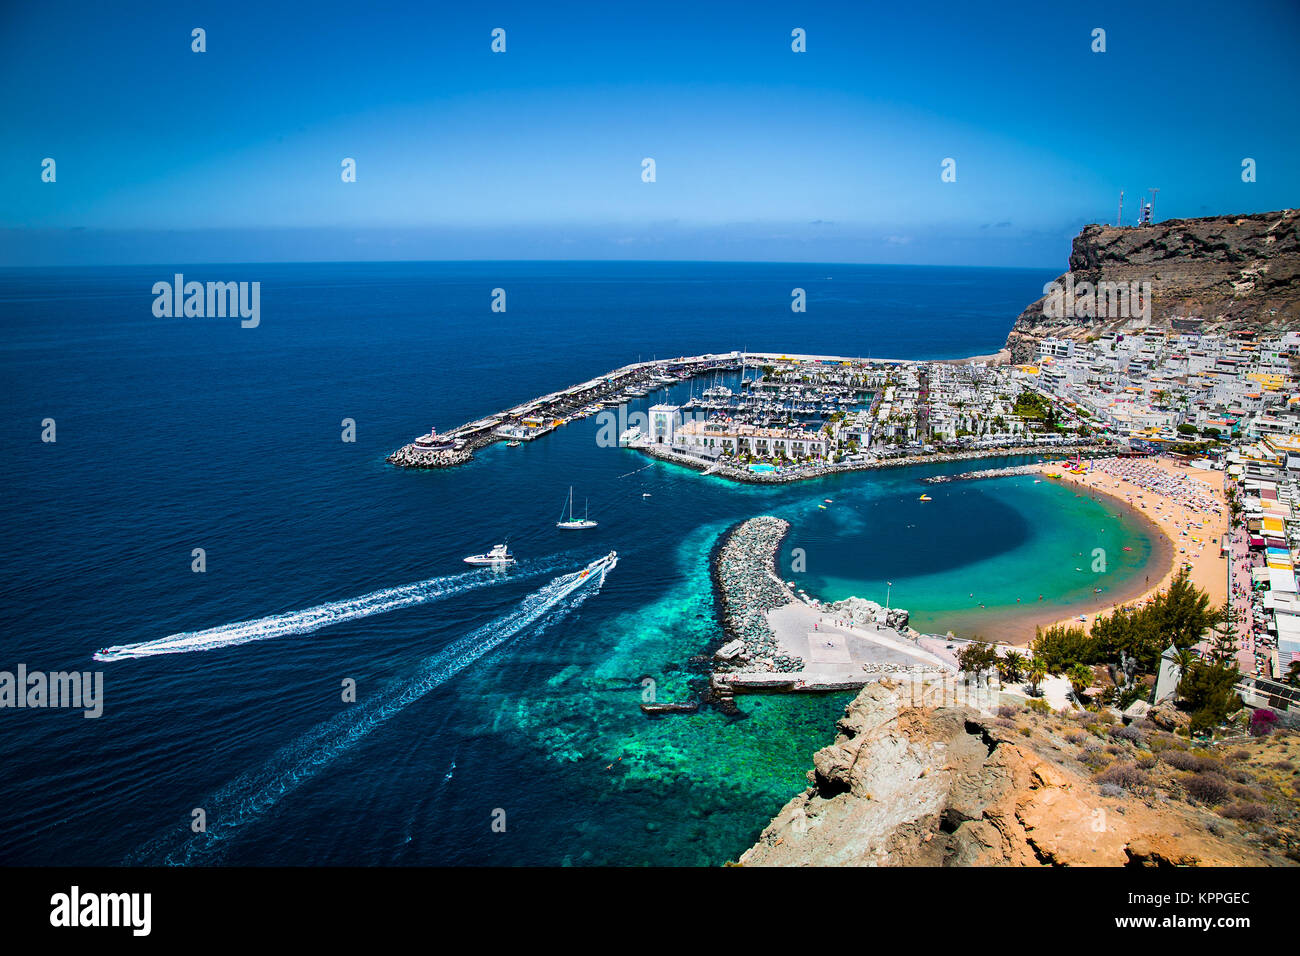 Puerto de Mogan town on the coast of Gran Canaria island, Spain. Stock Photo